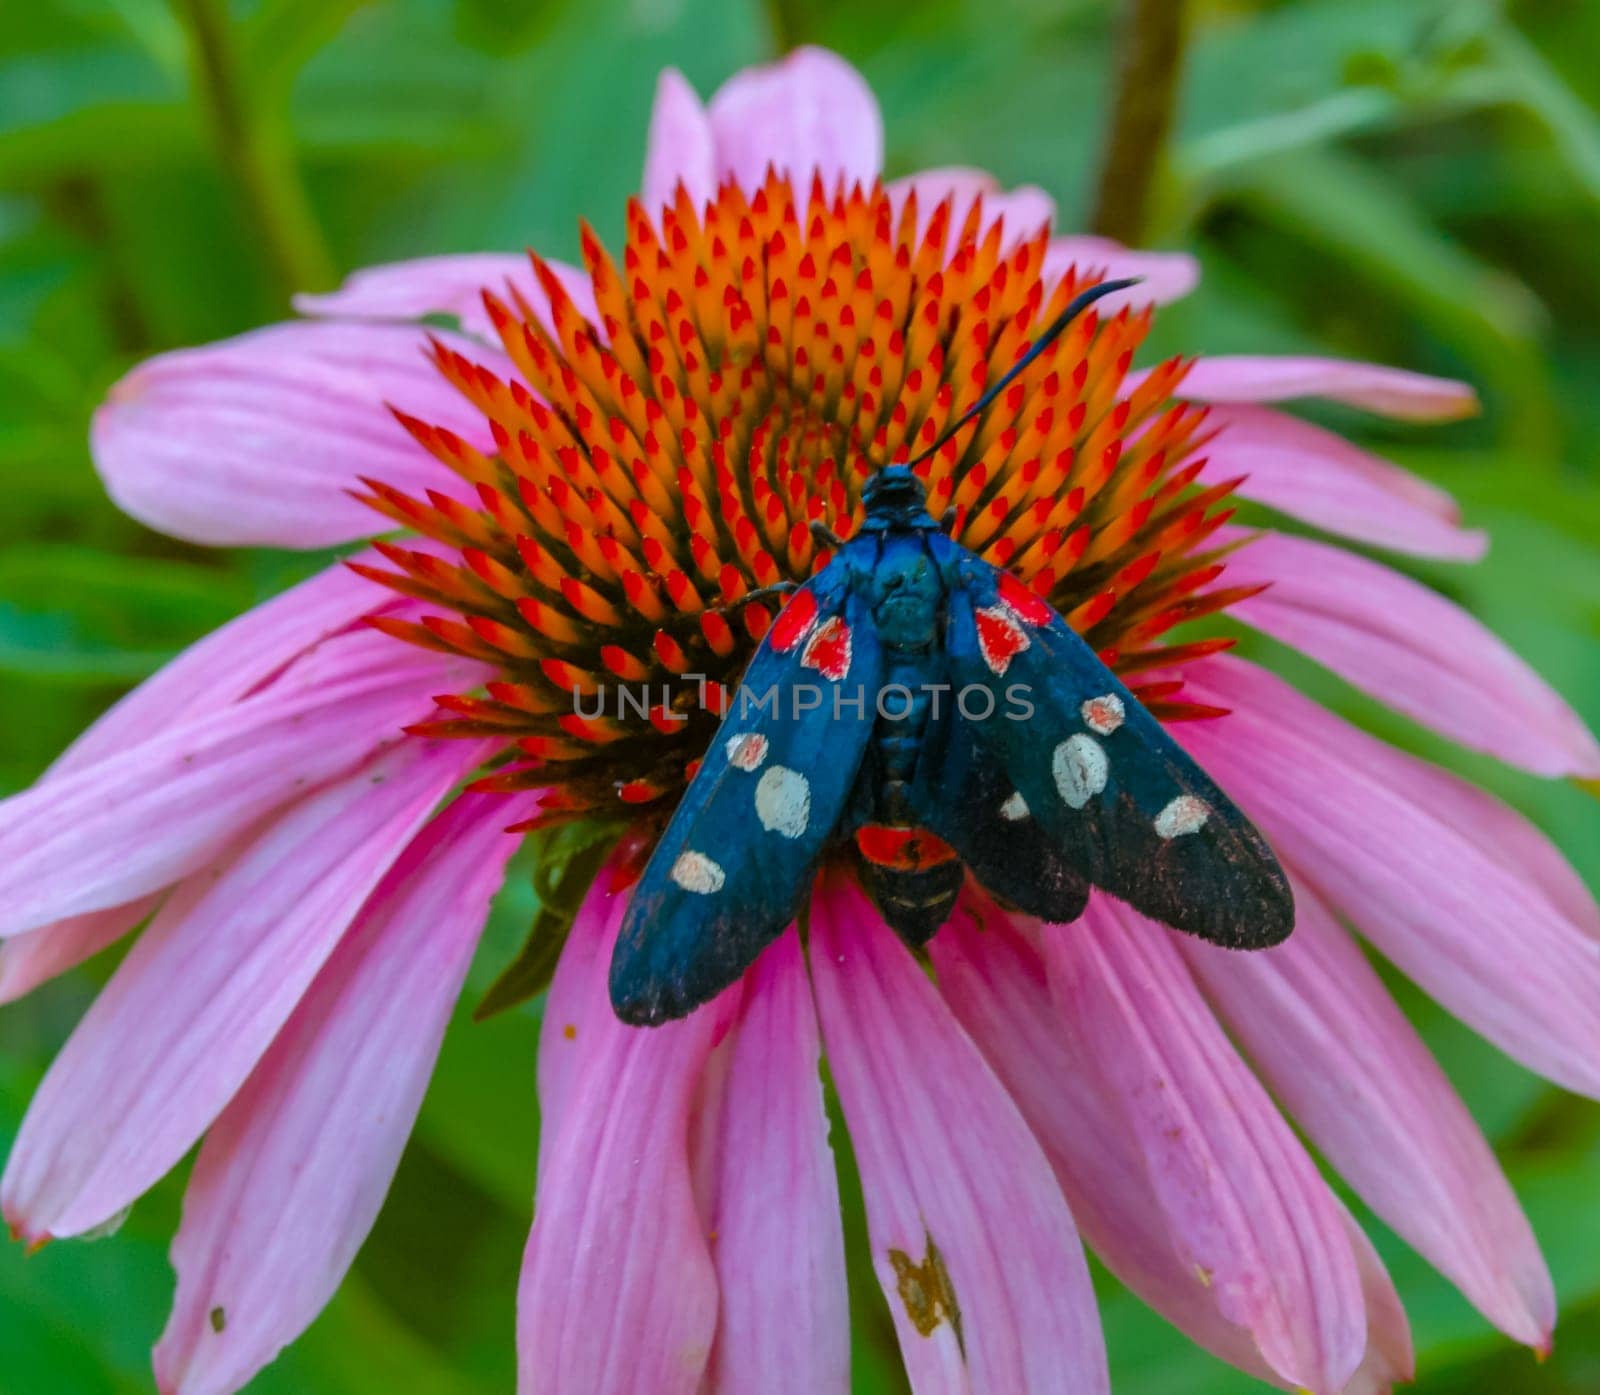 burnet moth (Zygaena ephialtes), butterflies sit on an echinacea flower and drink nectar by Hydrobiolog